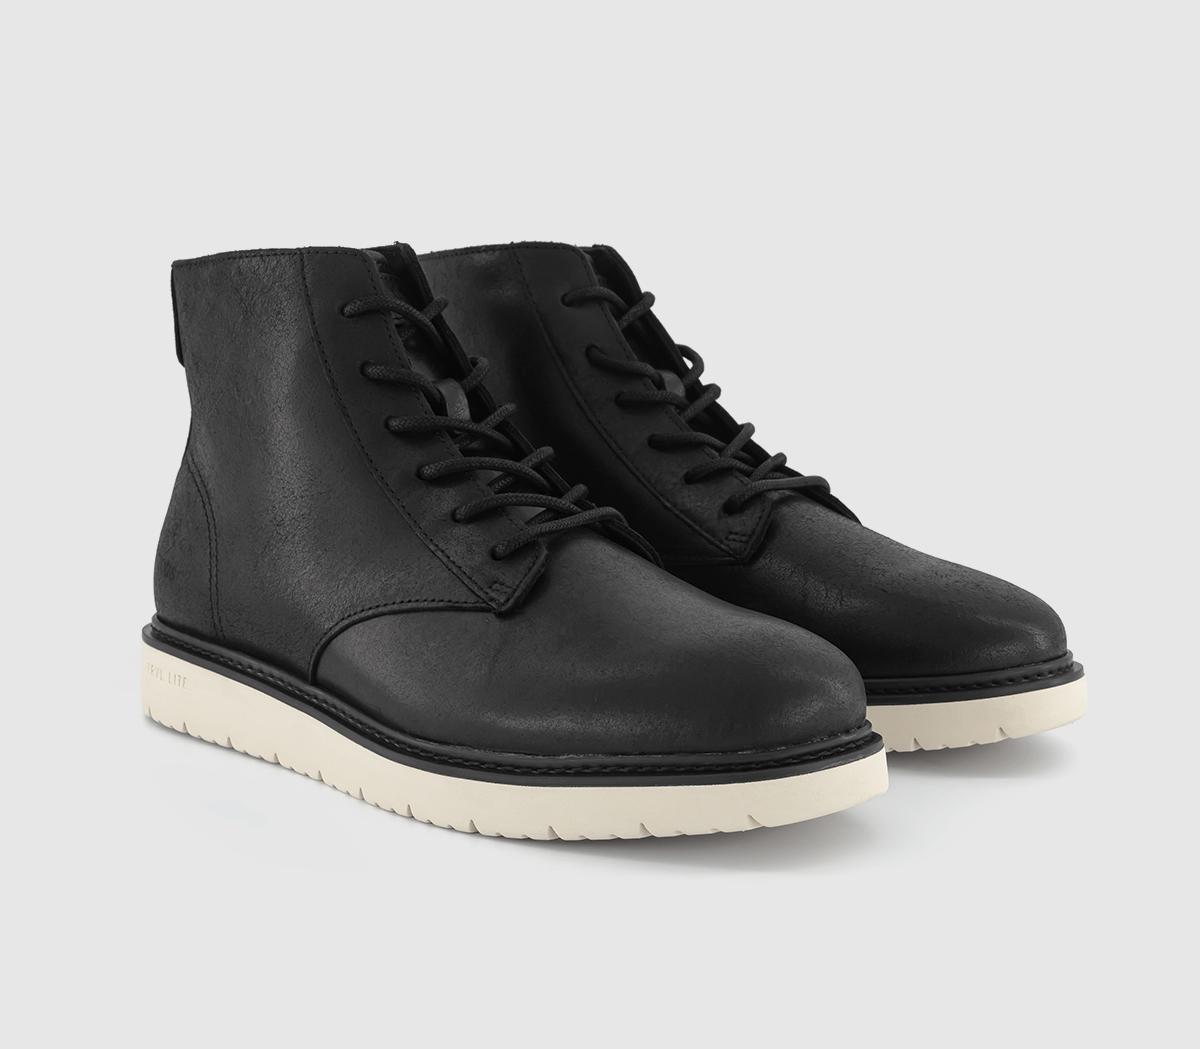 TOMS Mens Navi Trvl Lite Ranger Shoes Black Leather, 8